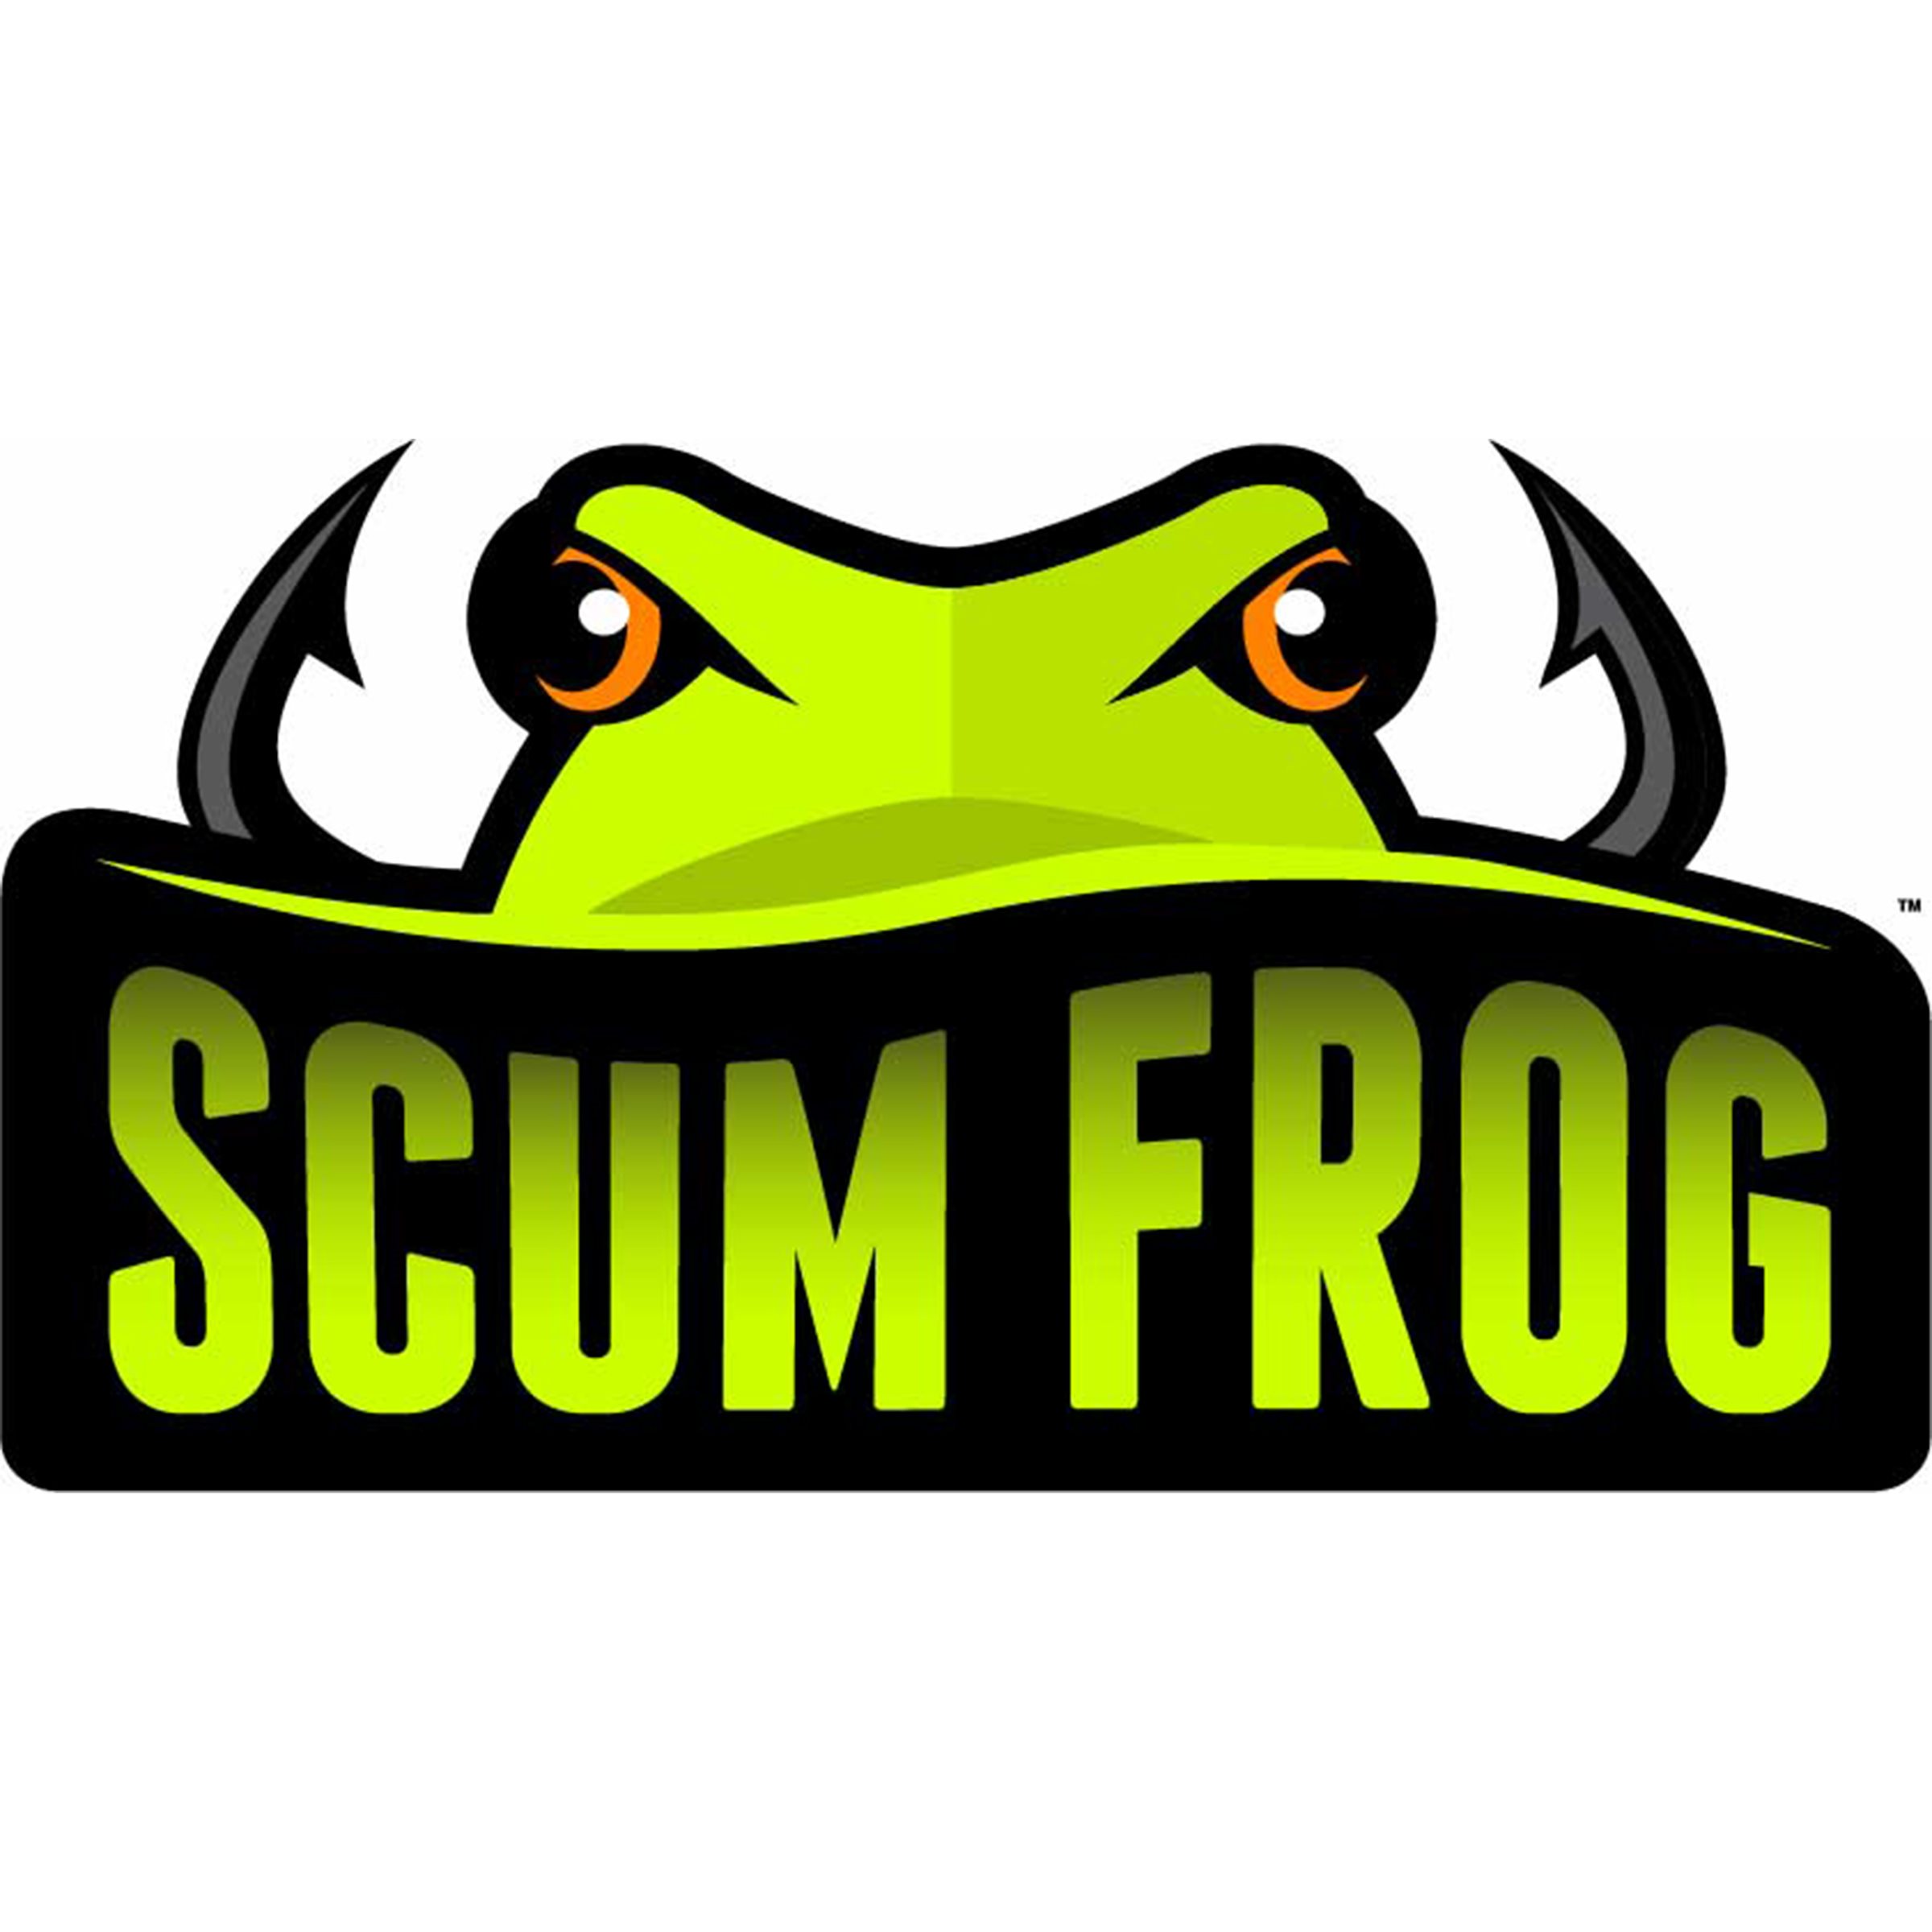 A_Scum-frog